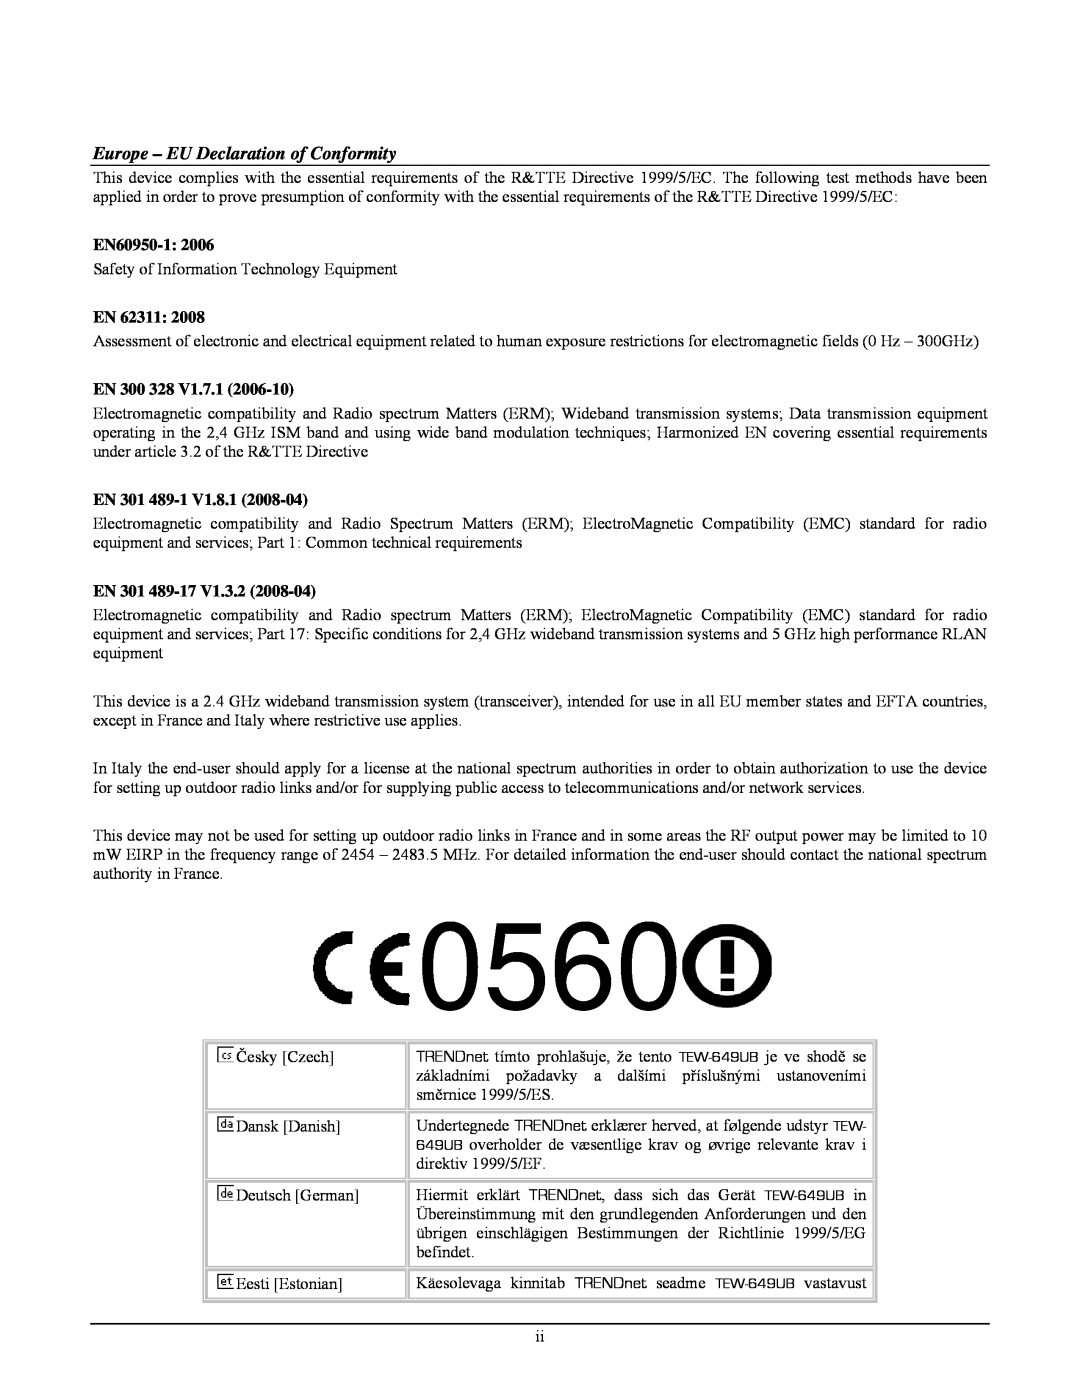 TRENDnet TEW-649UB manual 0560, Europe - EU Declaration of Conformity, EN60950-1, En, EN 300, EN 301 489-17 